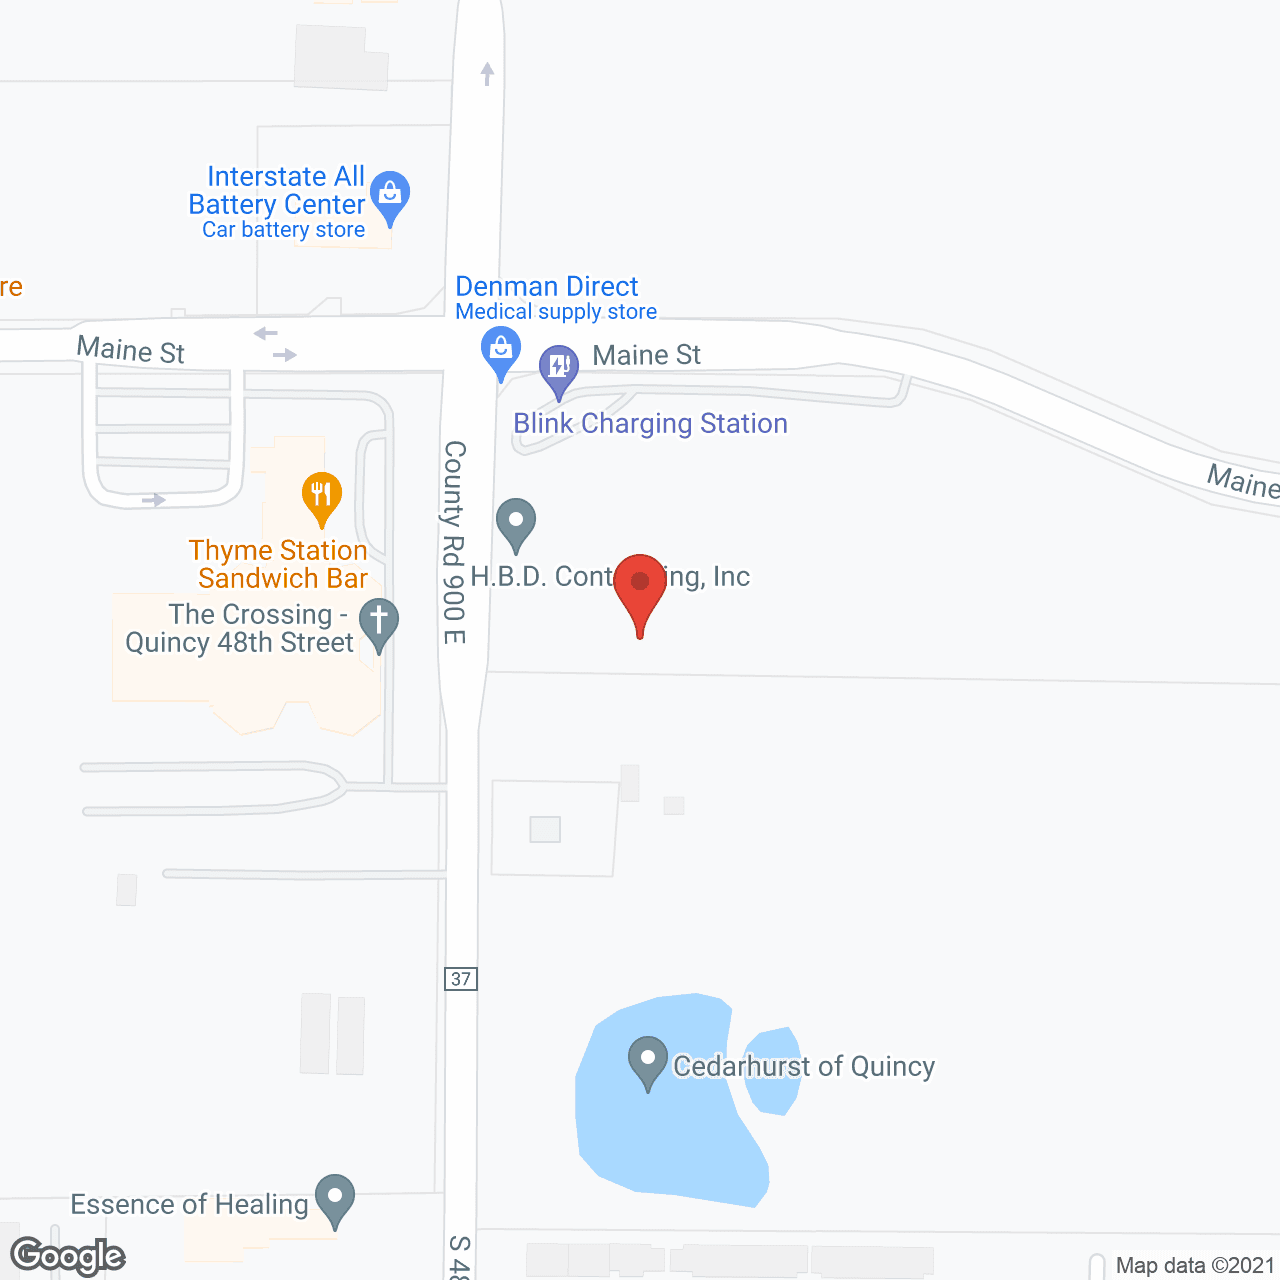 Cedarhurst of Quincy in google map